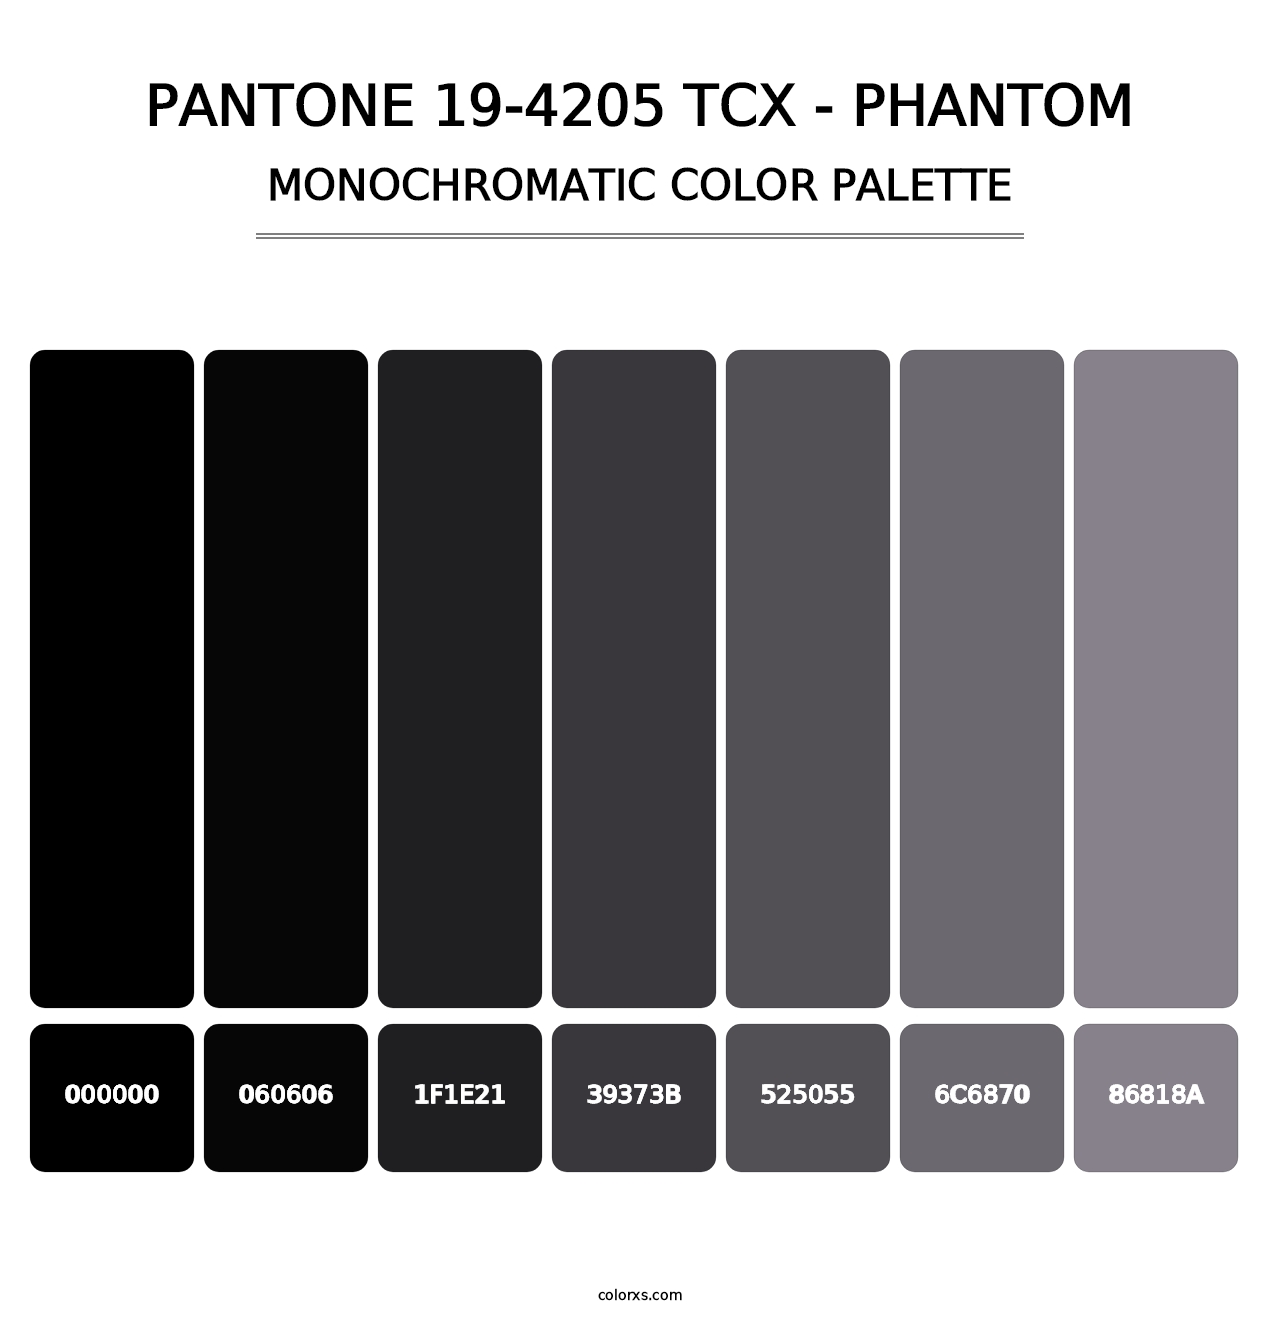 PANTONE 19-4205 TCX - Phantom - Monochromatic Color Palette